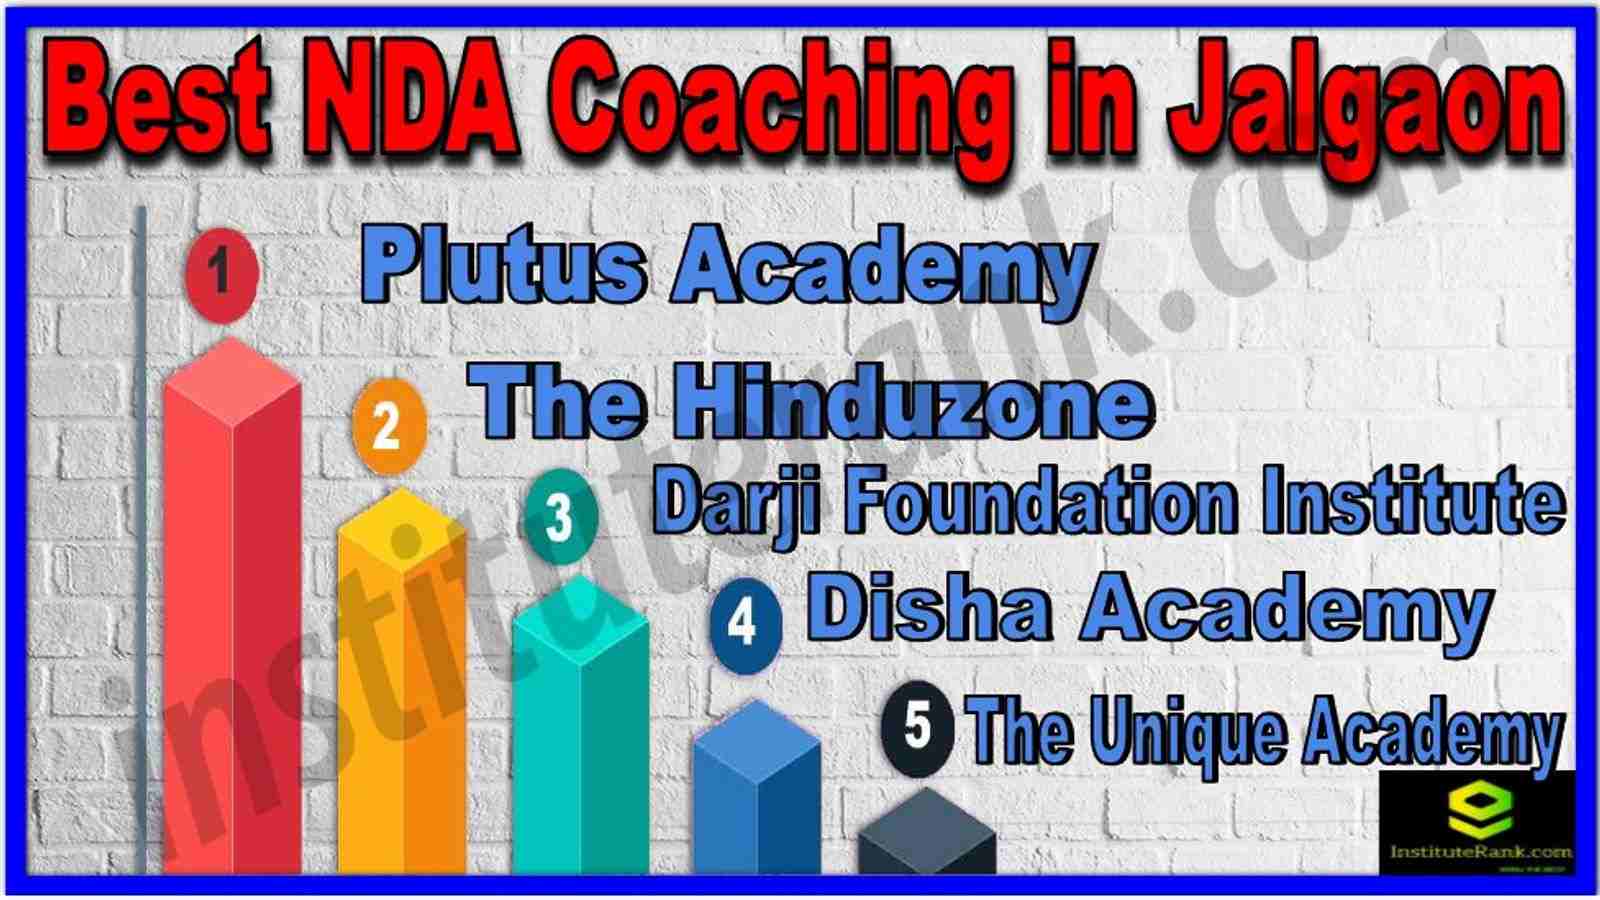 Best NDA Coaching in Jalgaon